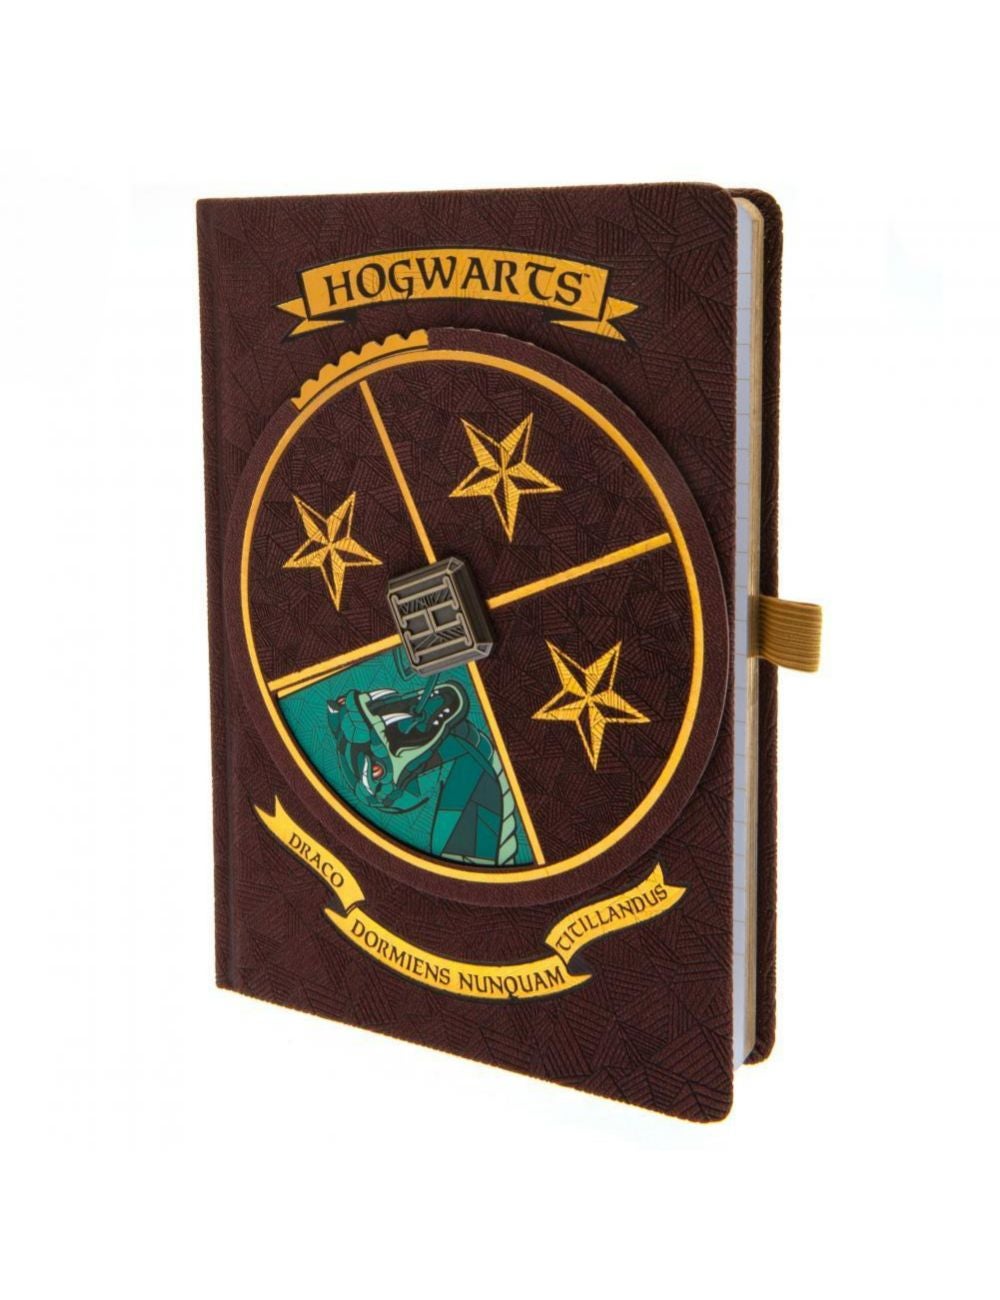 Harry Potter Premium Spinner Notebook